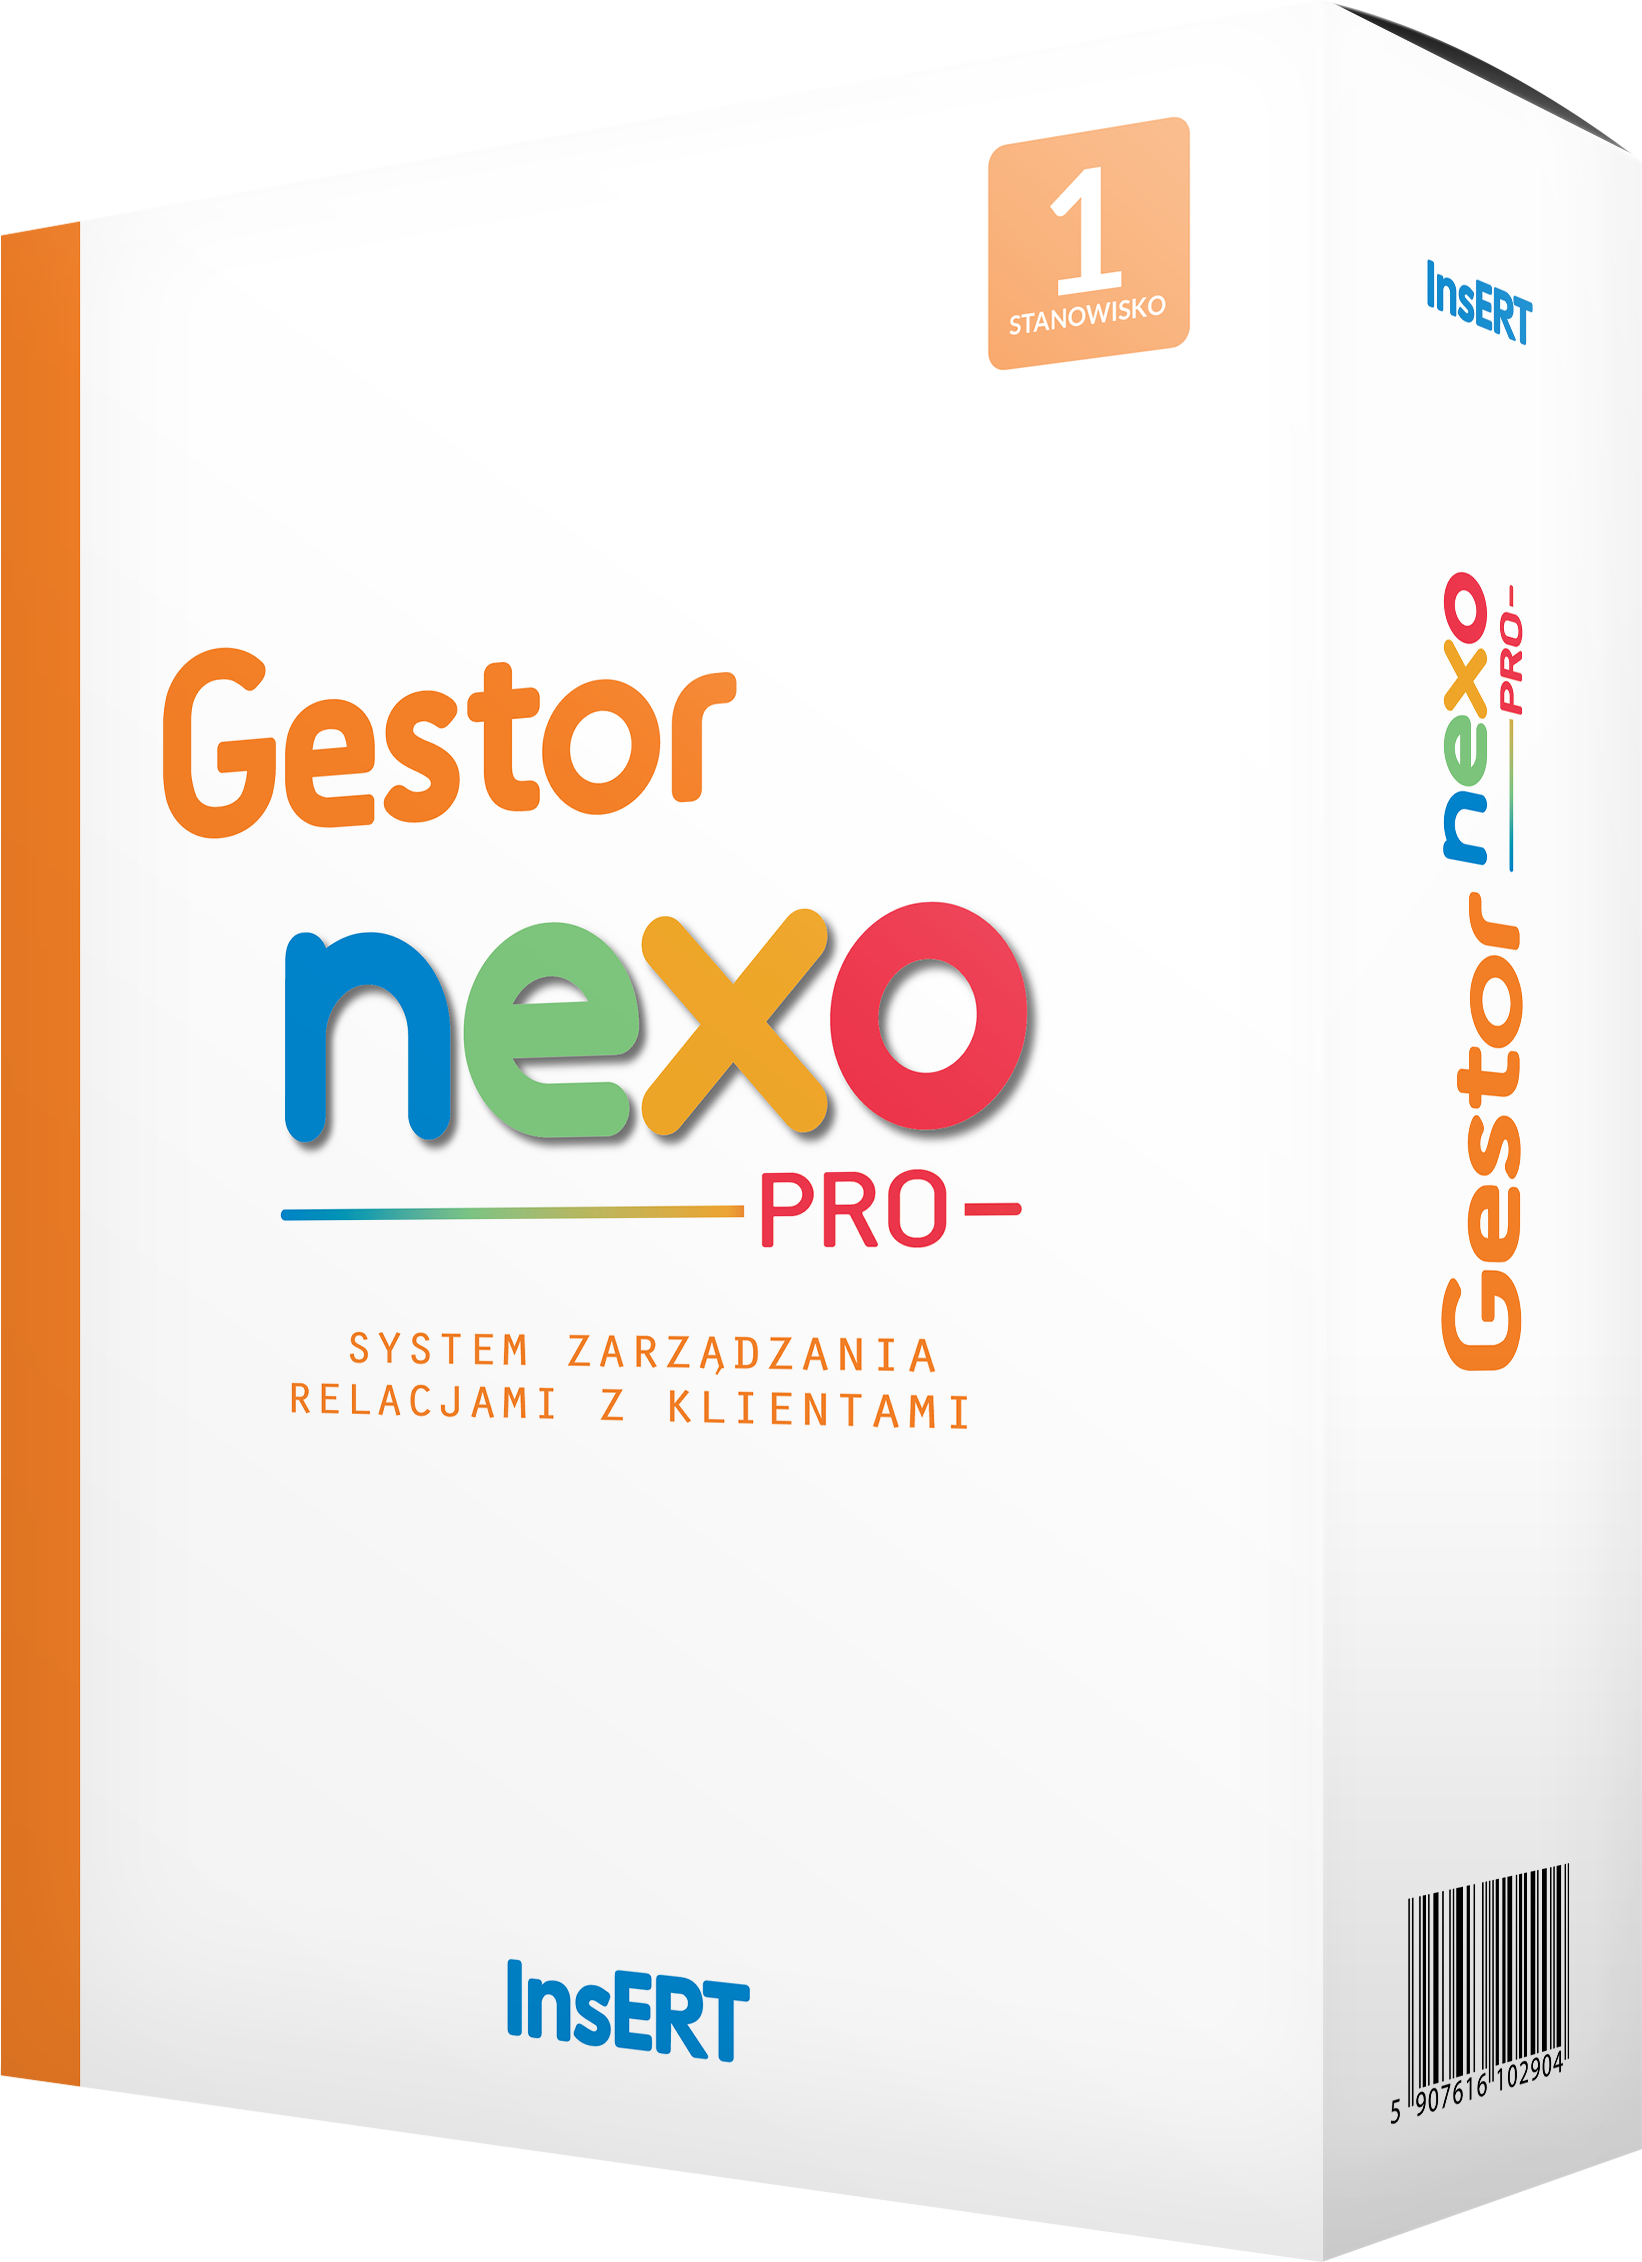 Zdjęcie produktu Gestor nexo PRO + 1 stanowisko upgrade z GT Gestor